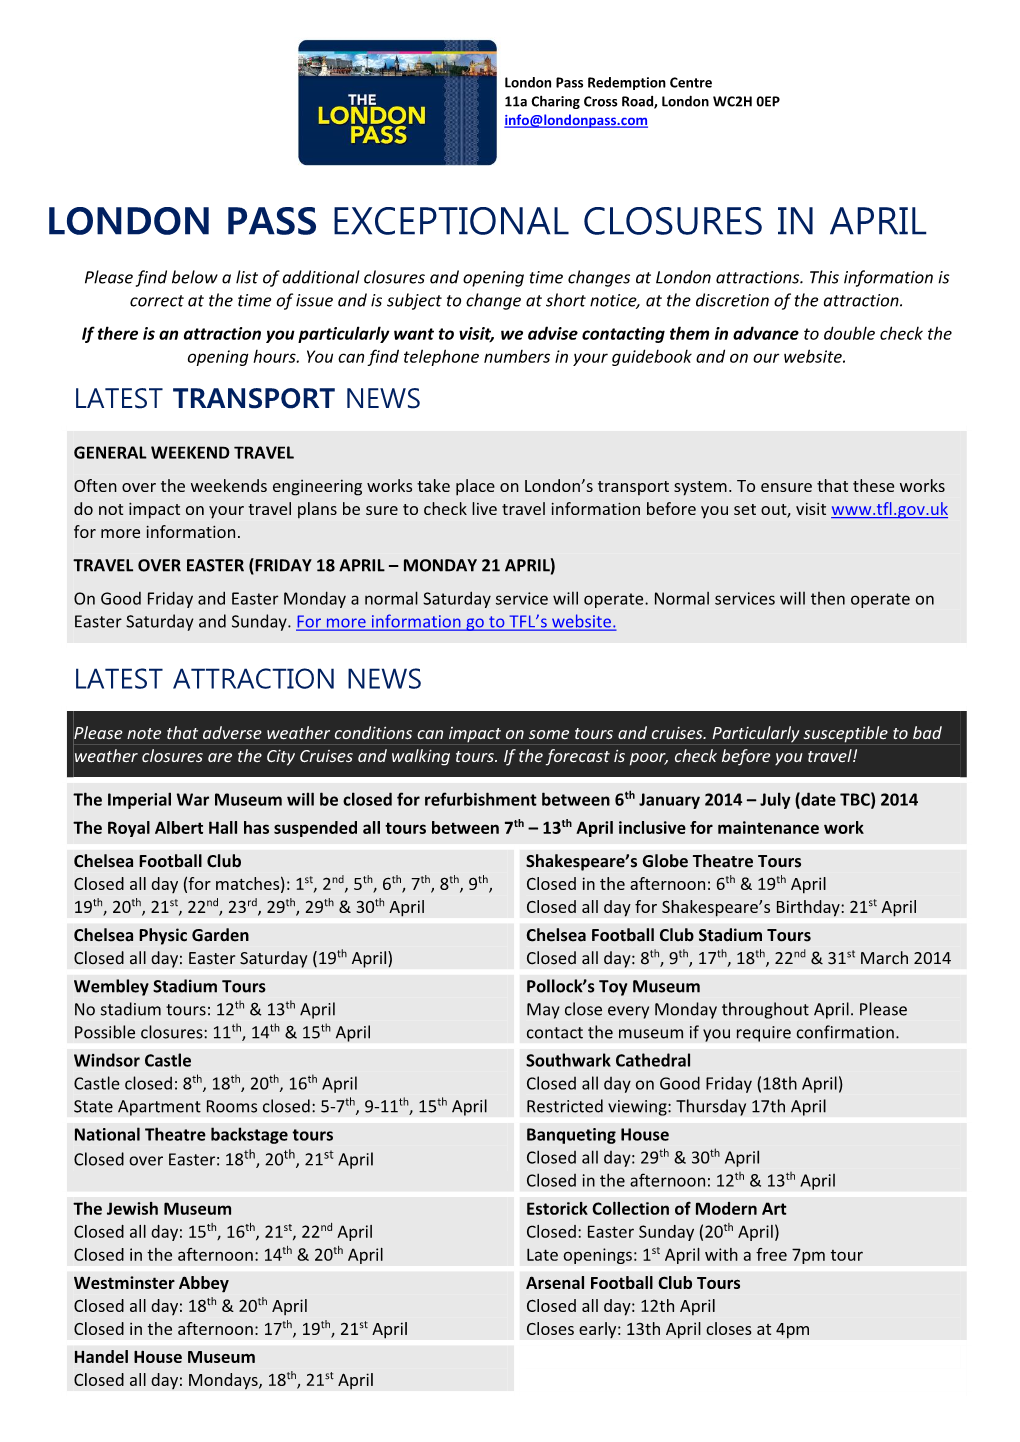 London Pass Latest News